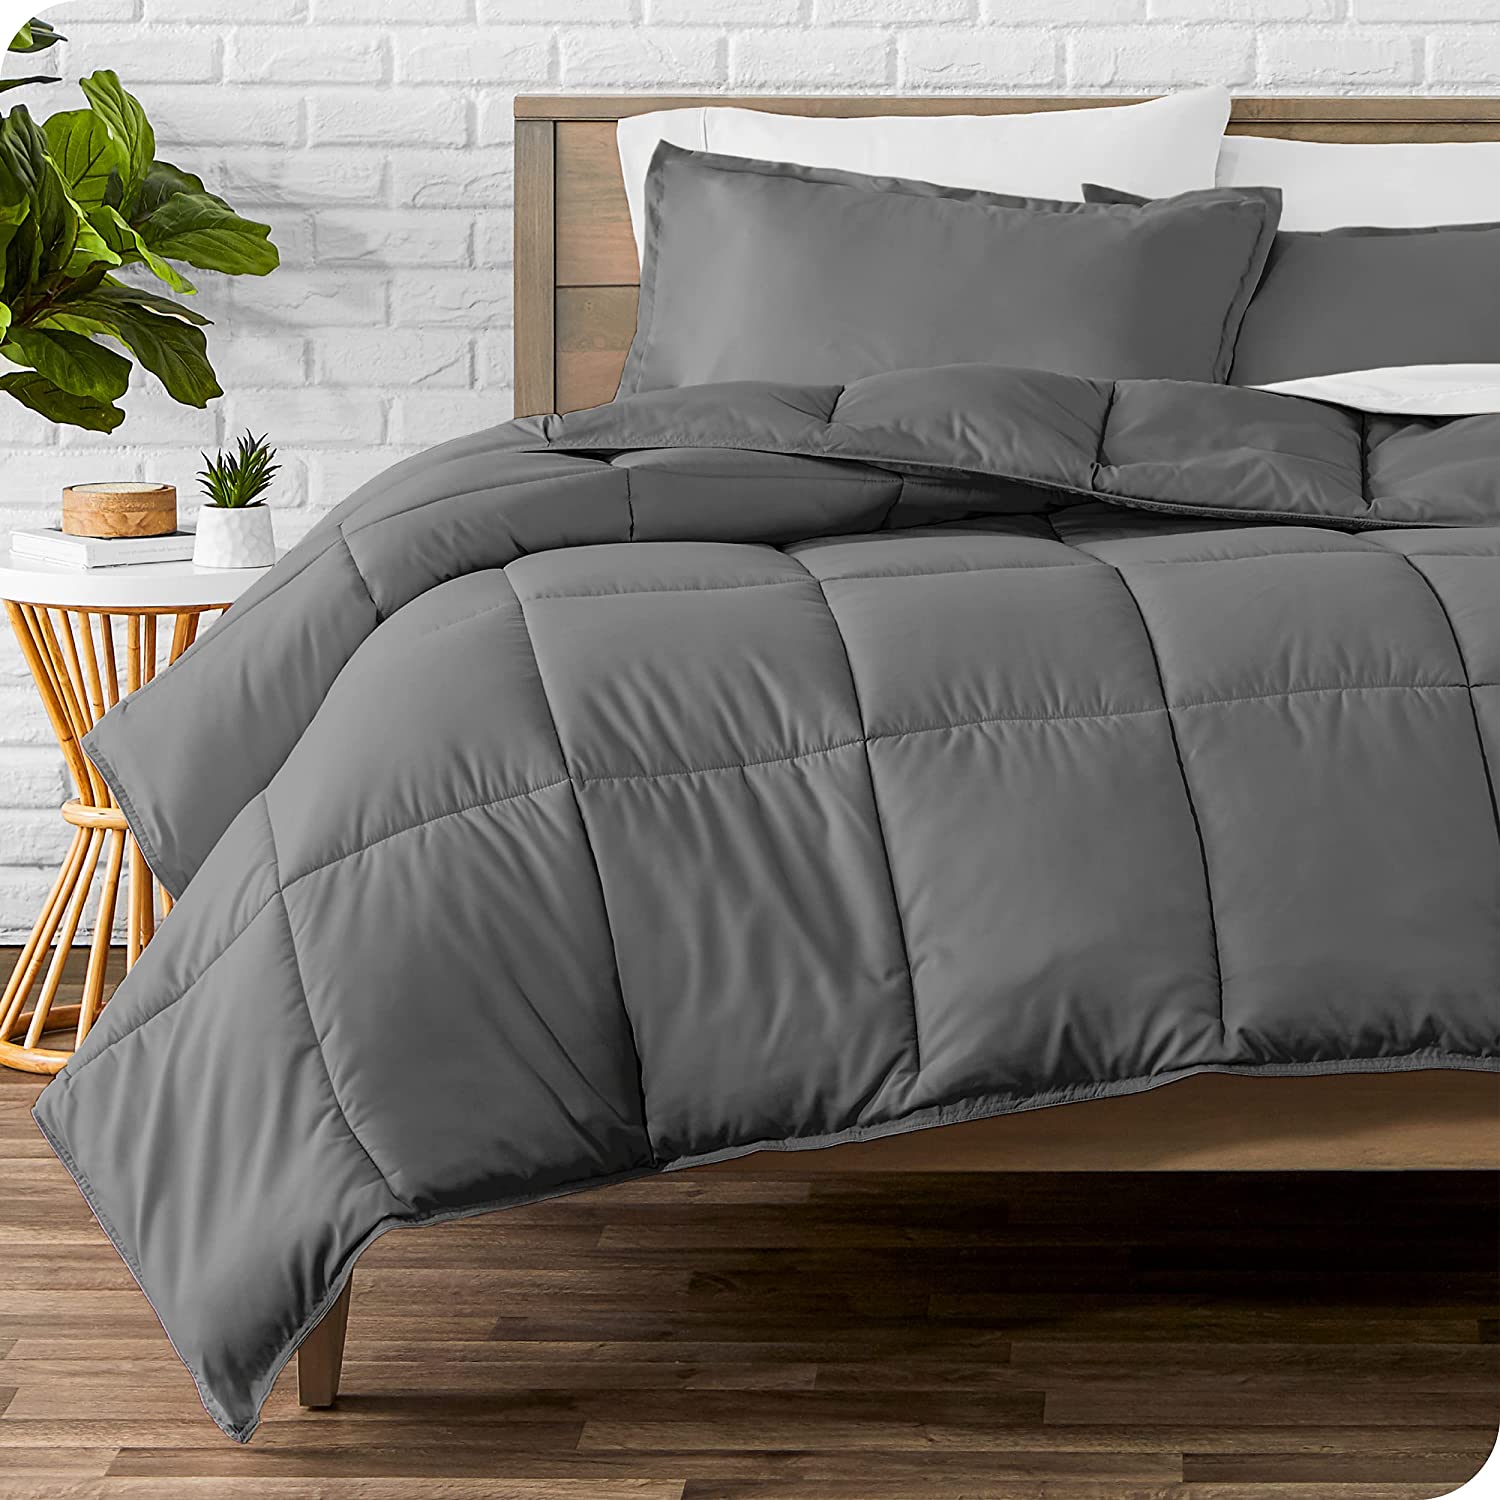 Bare Home Premium 1800 Series Queen-Size Bedding